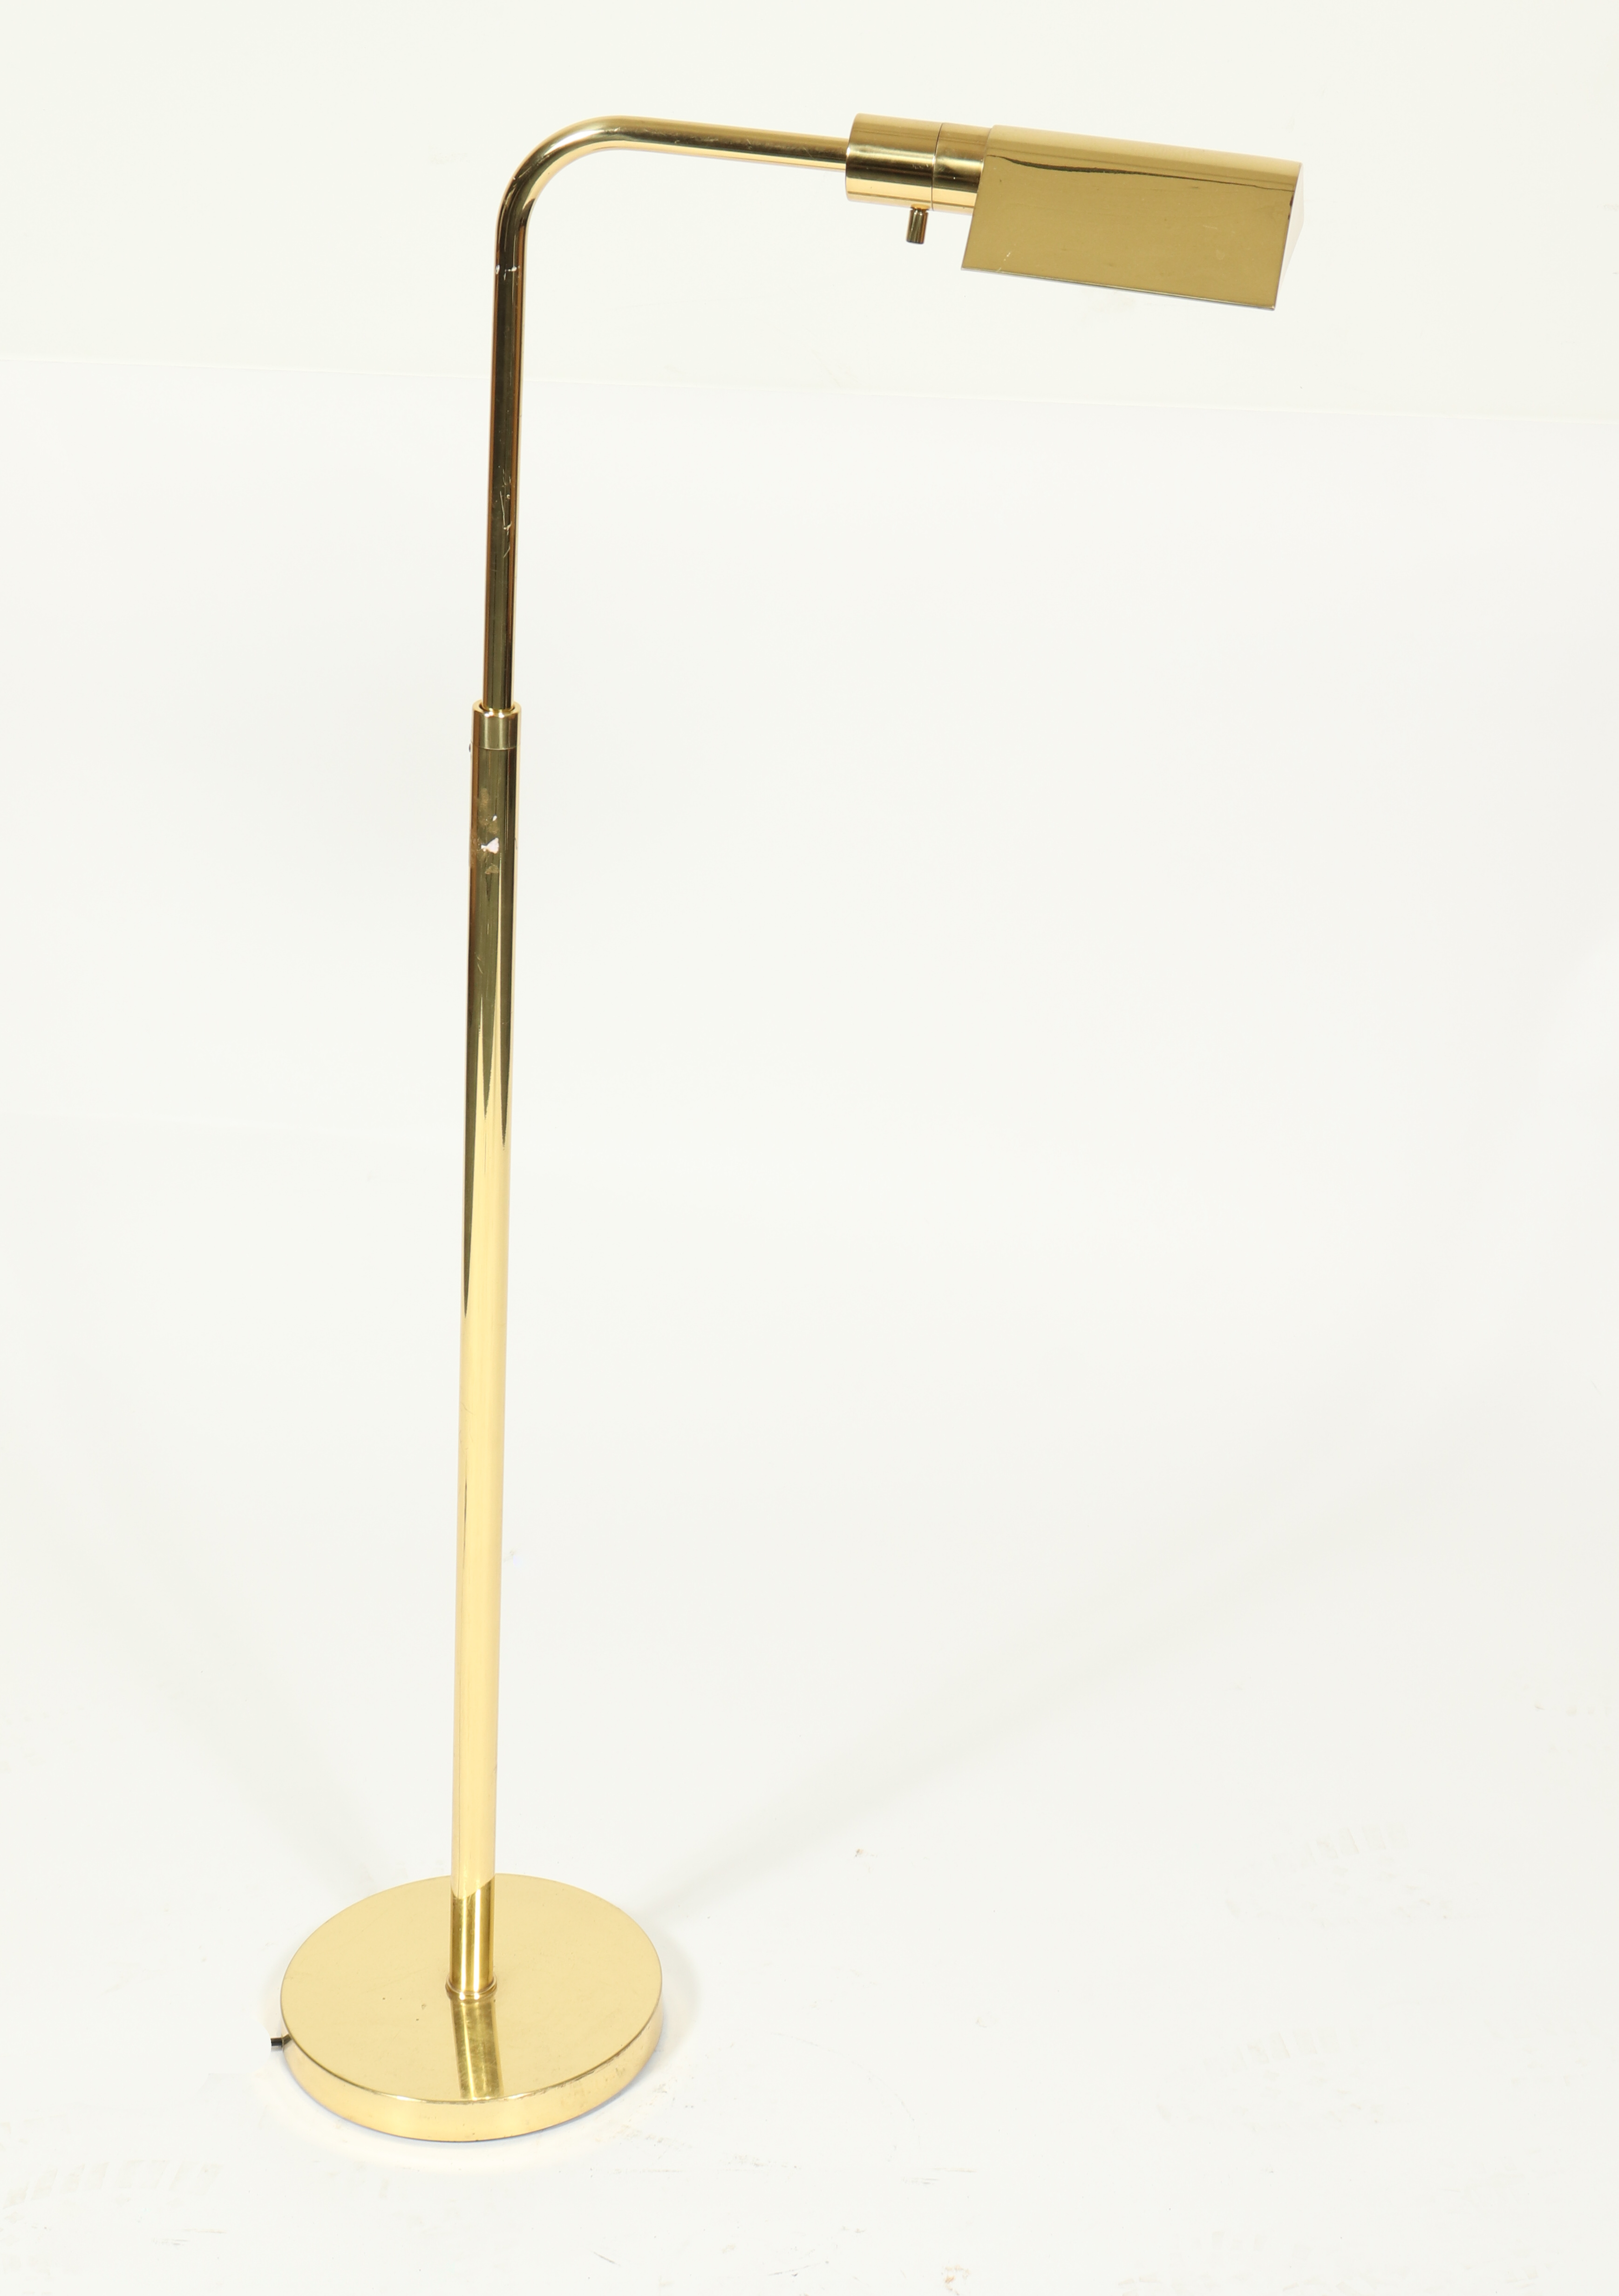 MODERN BRASS ADJUSTABLE FLOOR LAMP 3c36a5